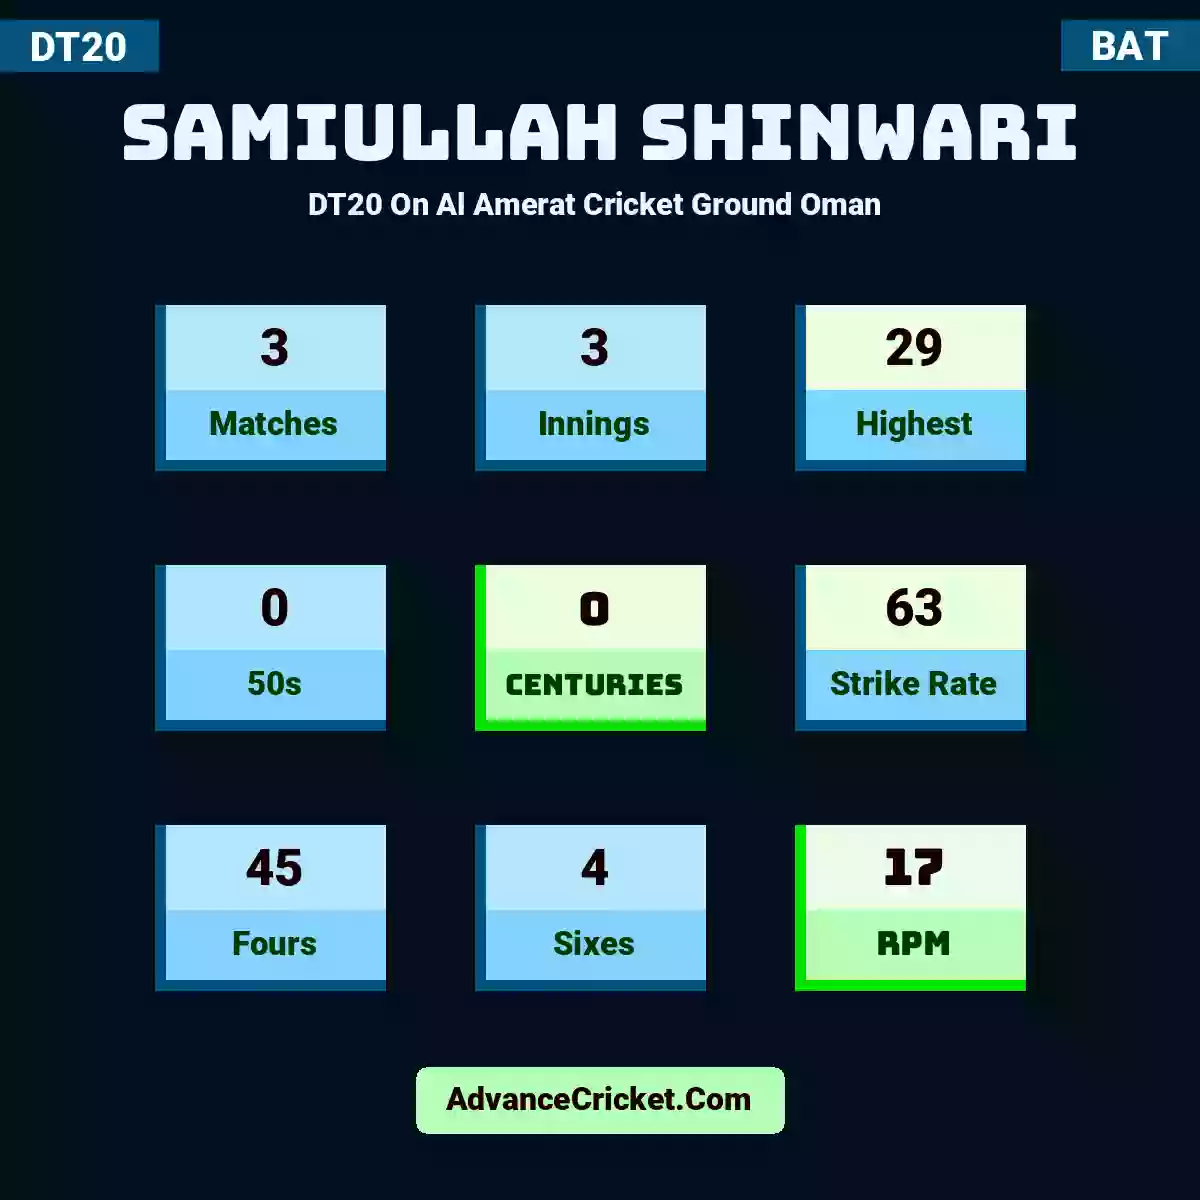 Samiullah Shinwari DT20  On Al Amerat Cricket Ground Oman , Samiullah Shinwari played 3 matches, scored 29 runs as highest, 0 half-centuries, and 0 centuries, with a strike rate of 63. S.Shinwari hit 45 fours and 4 sixes, with an RPM of 17.